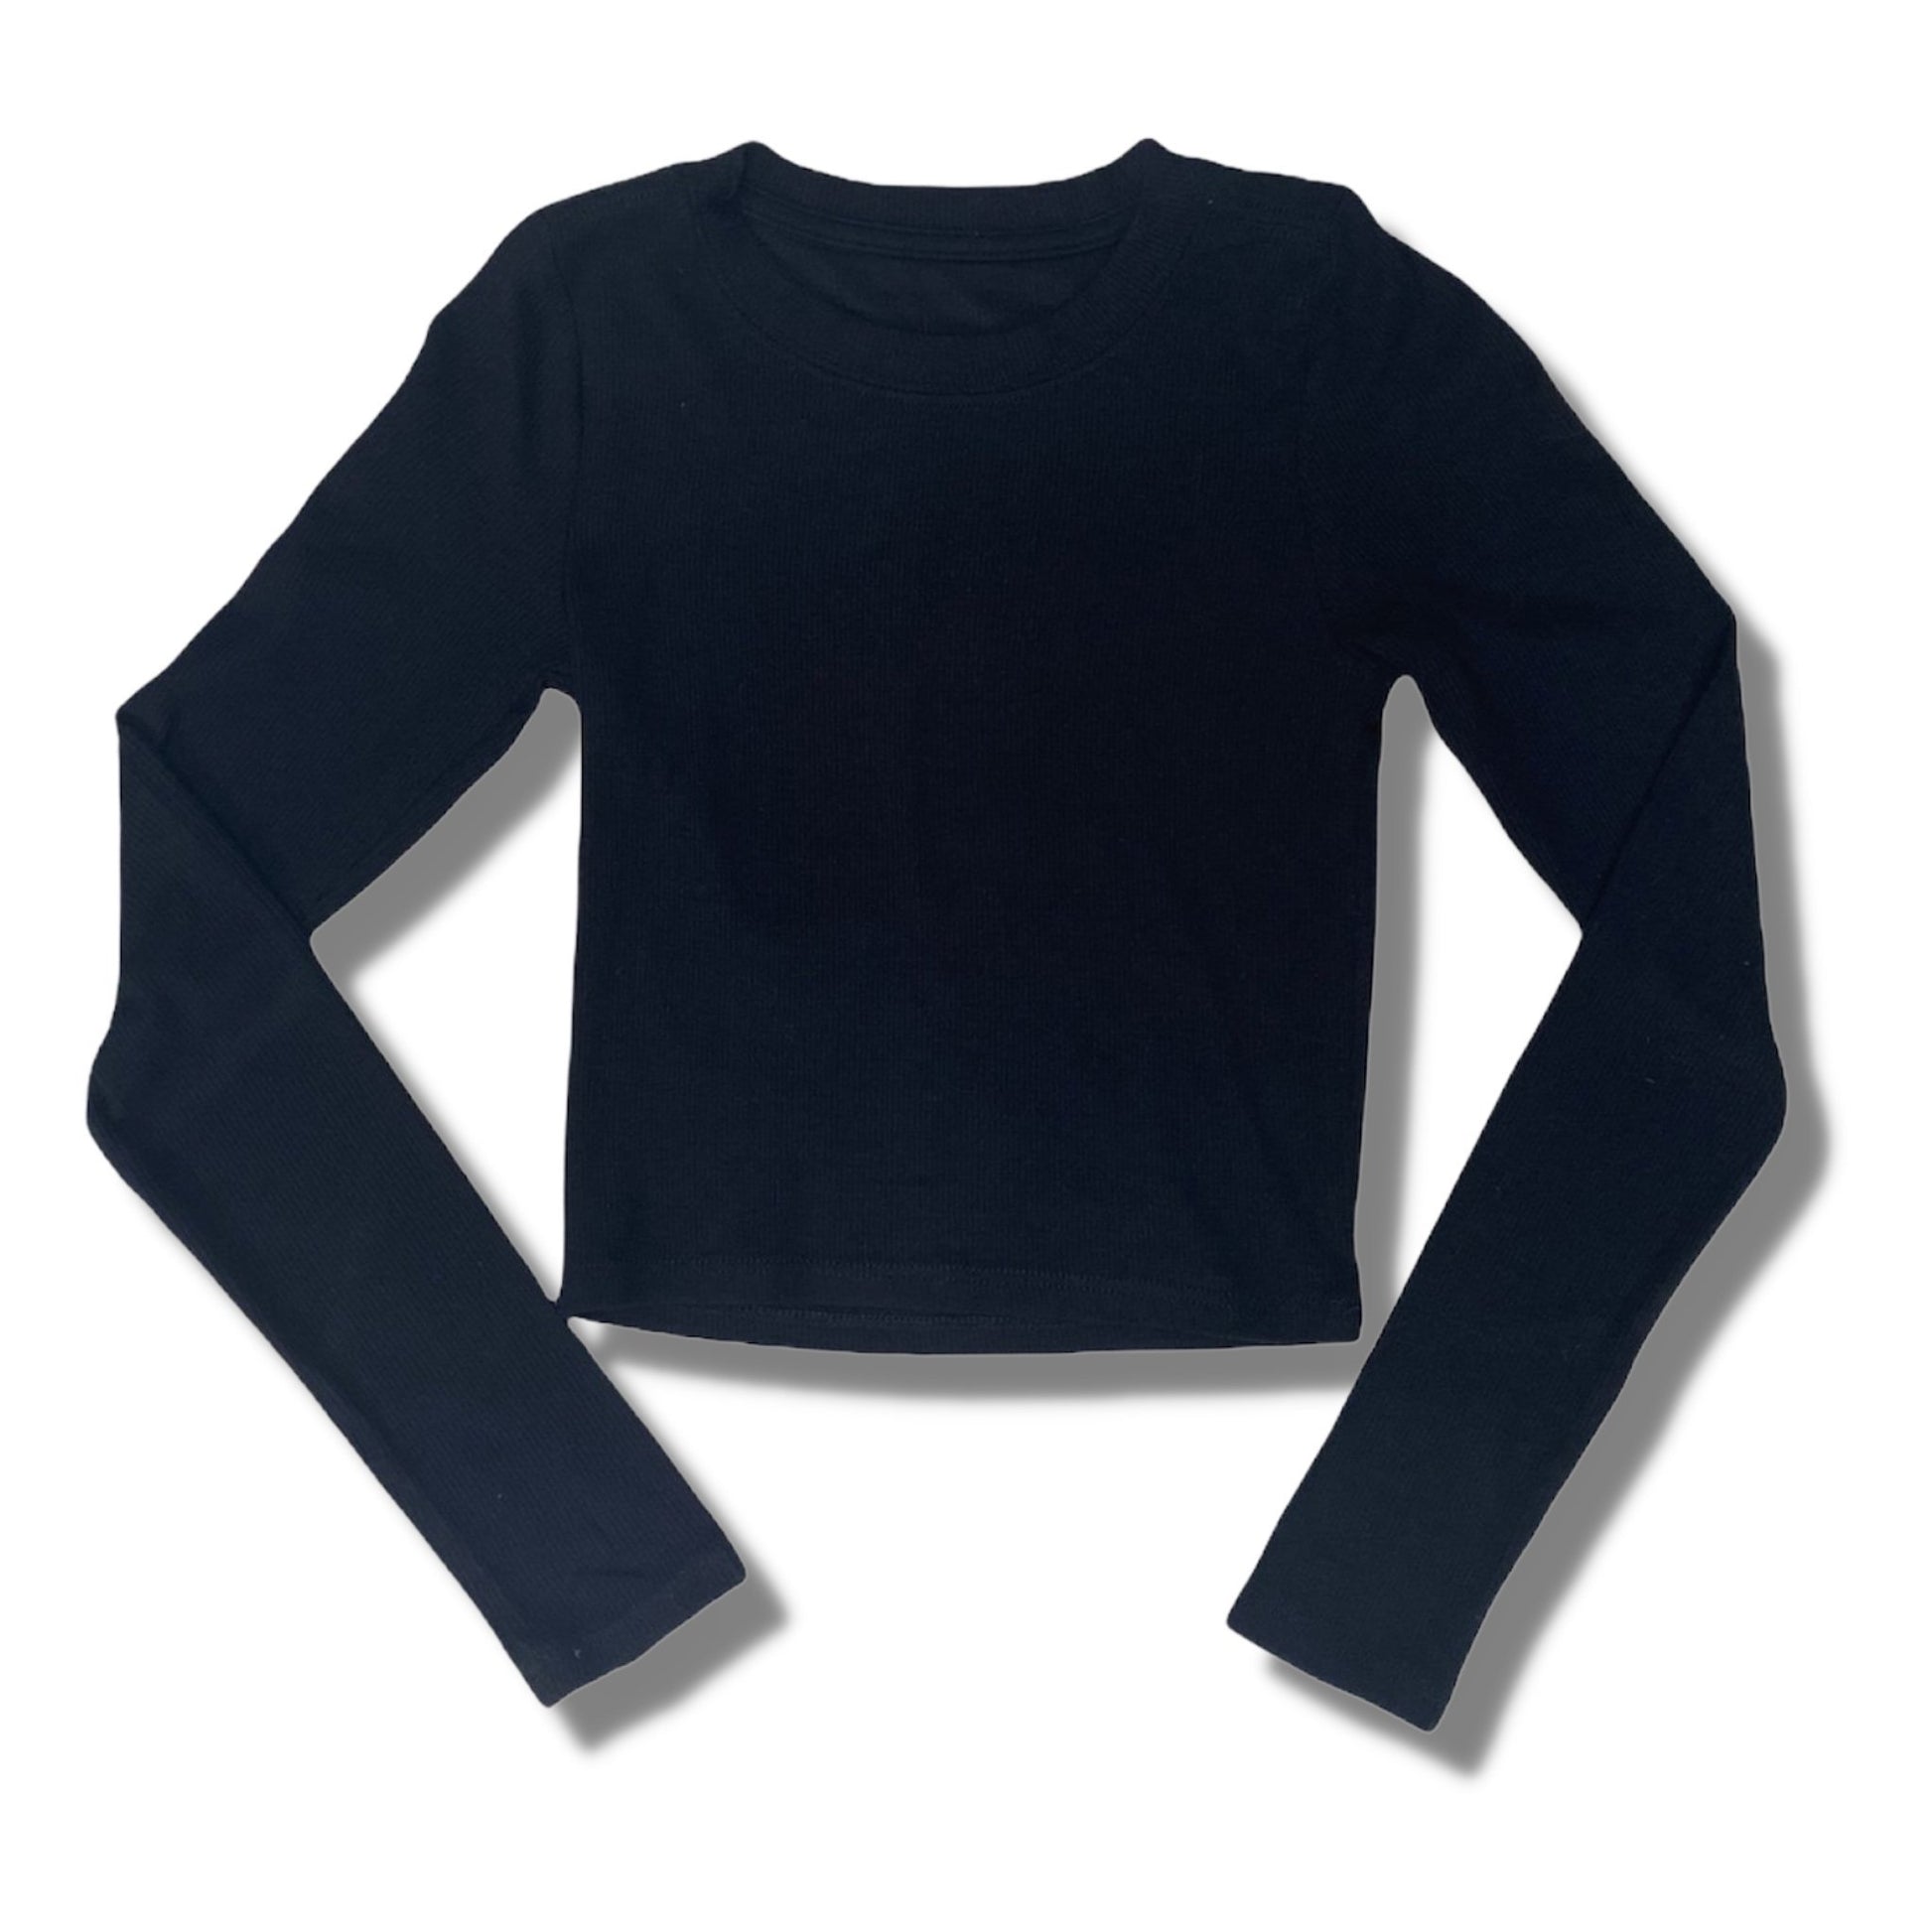 KatieJNYC Black L/S Livi Tee - a Spirit Animal - long sleeved tee shirt $45-$60 $60-$75 black